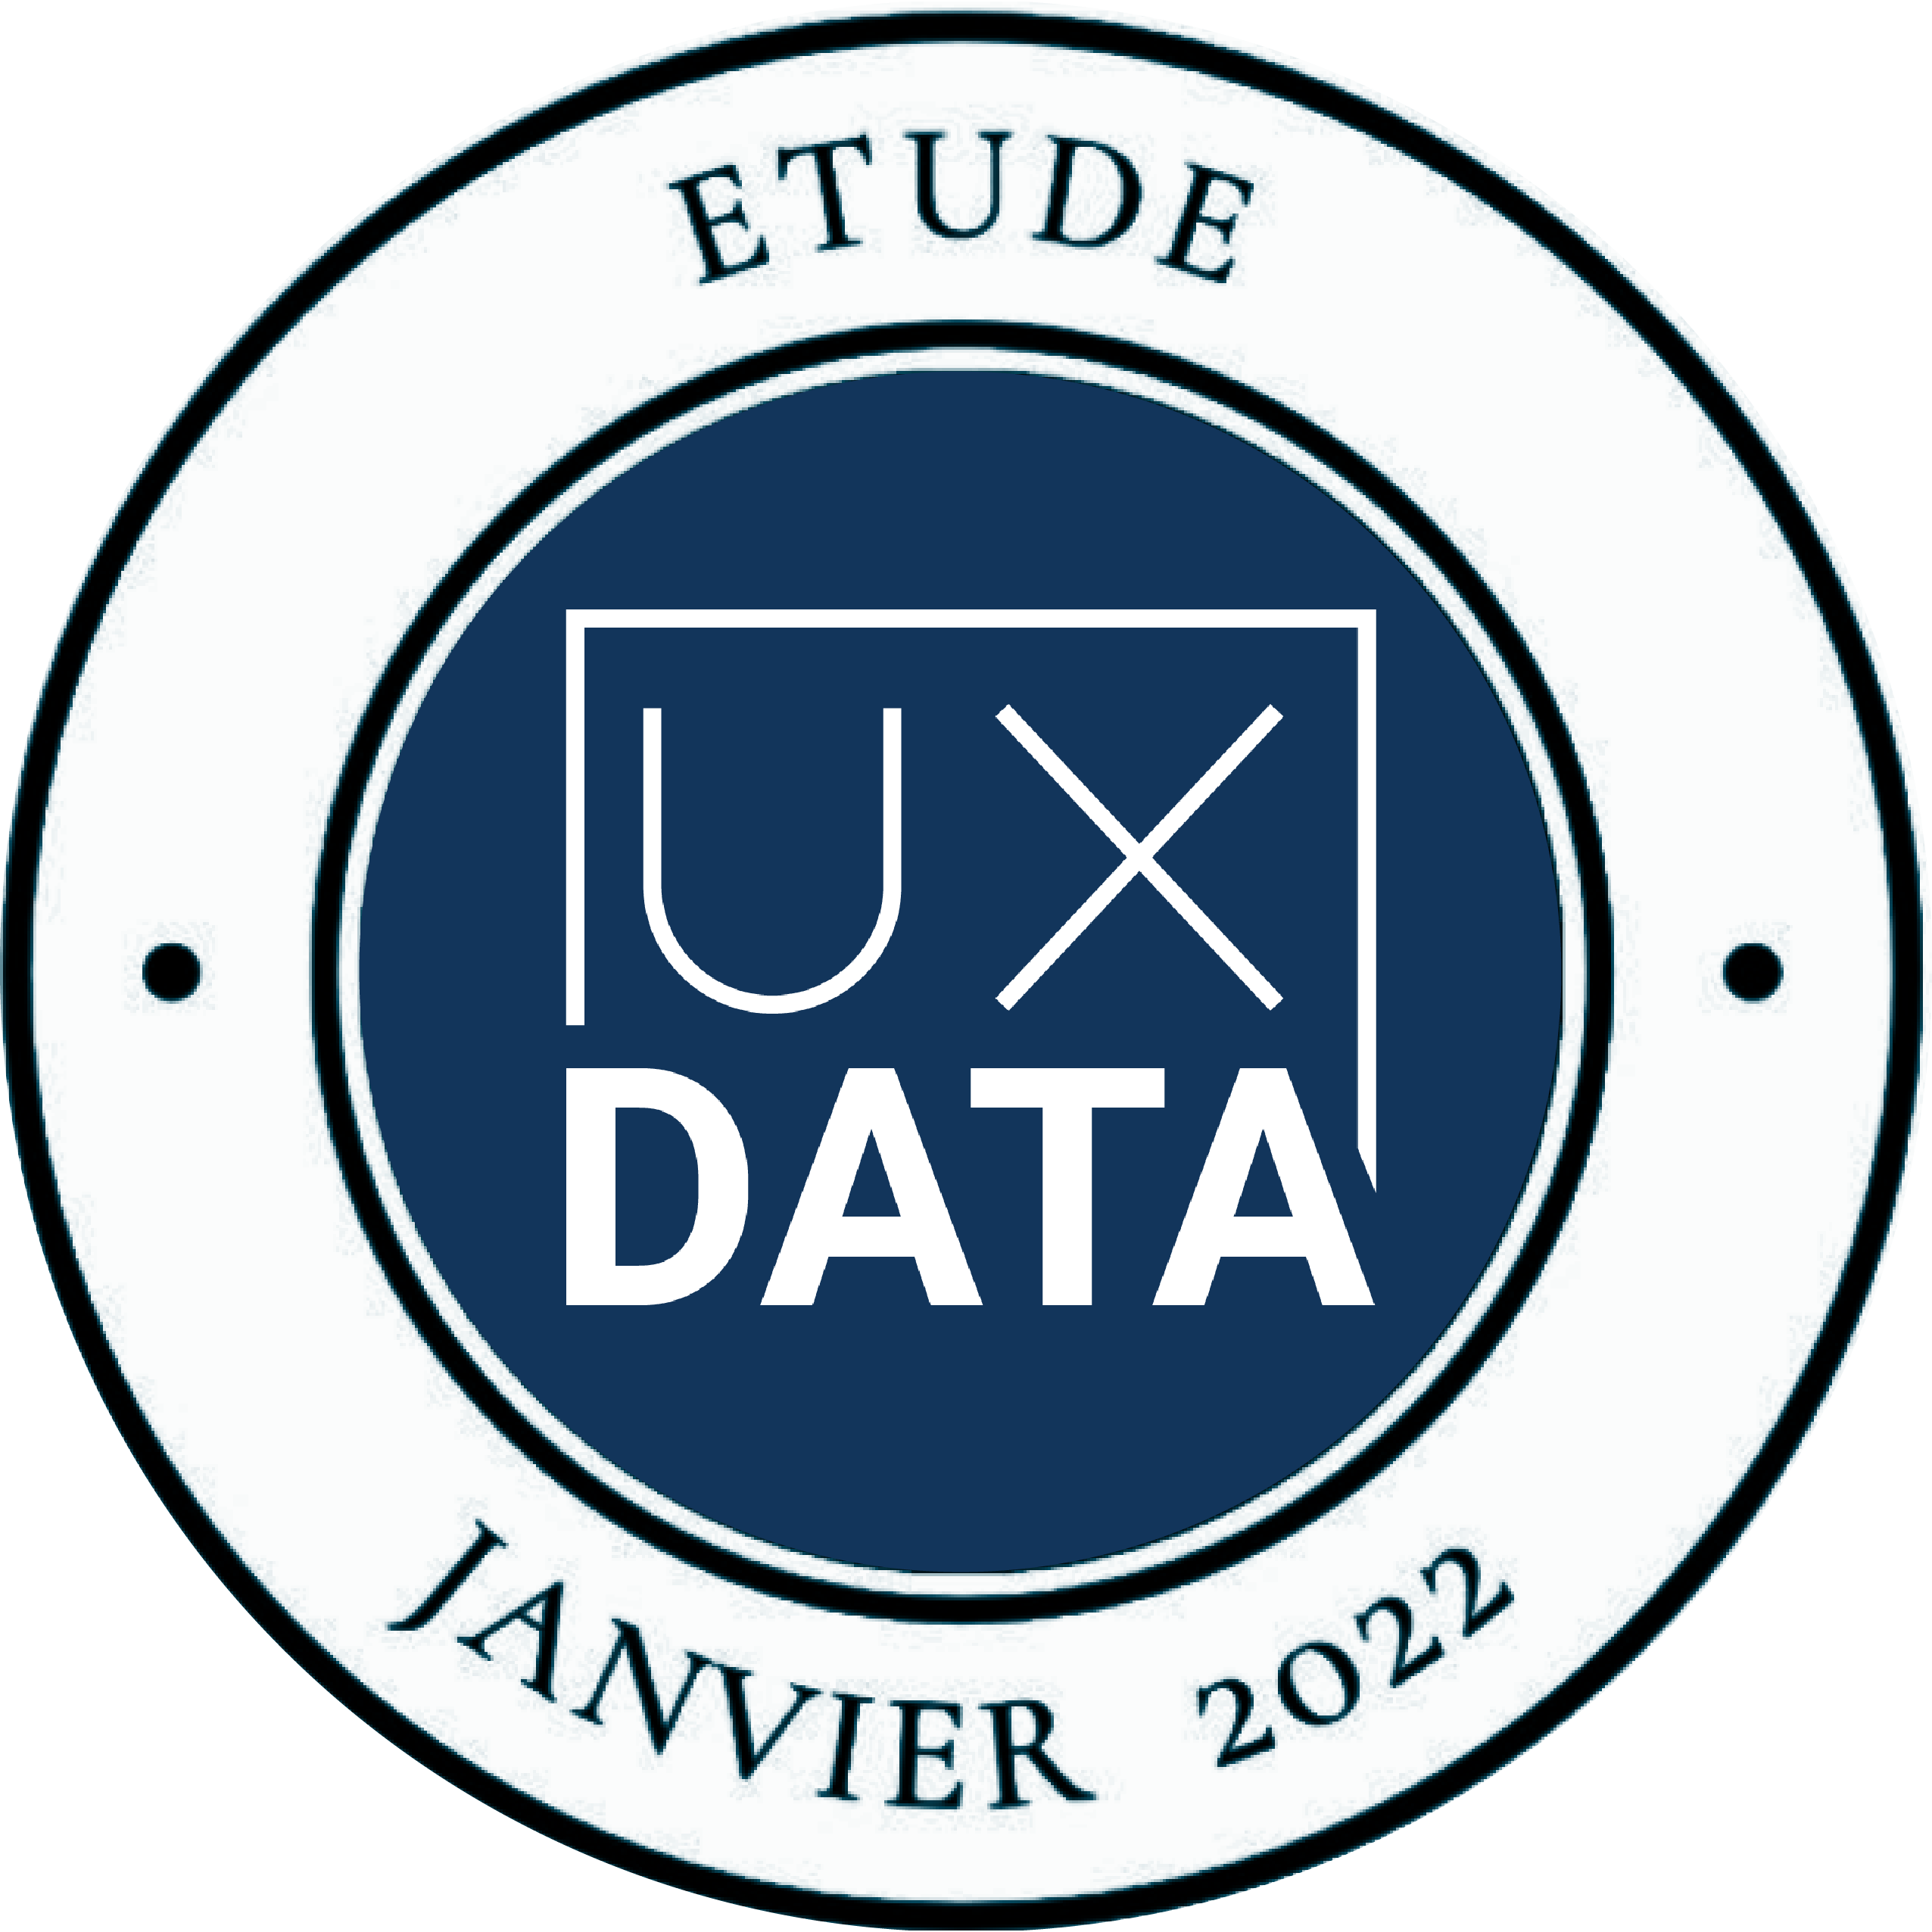 2022 "UX Data Study" stamp